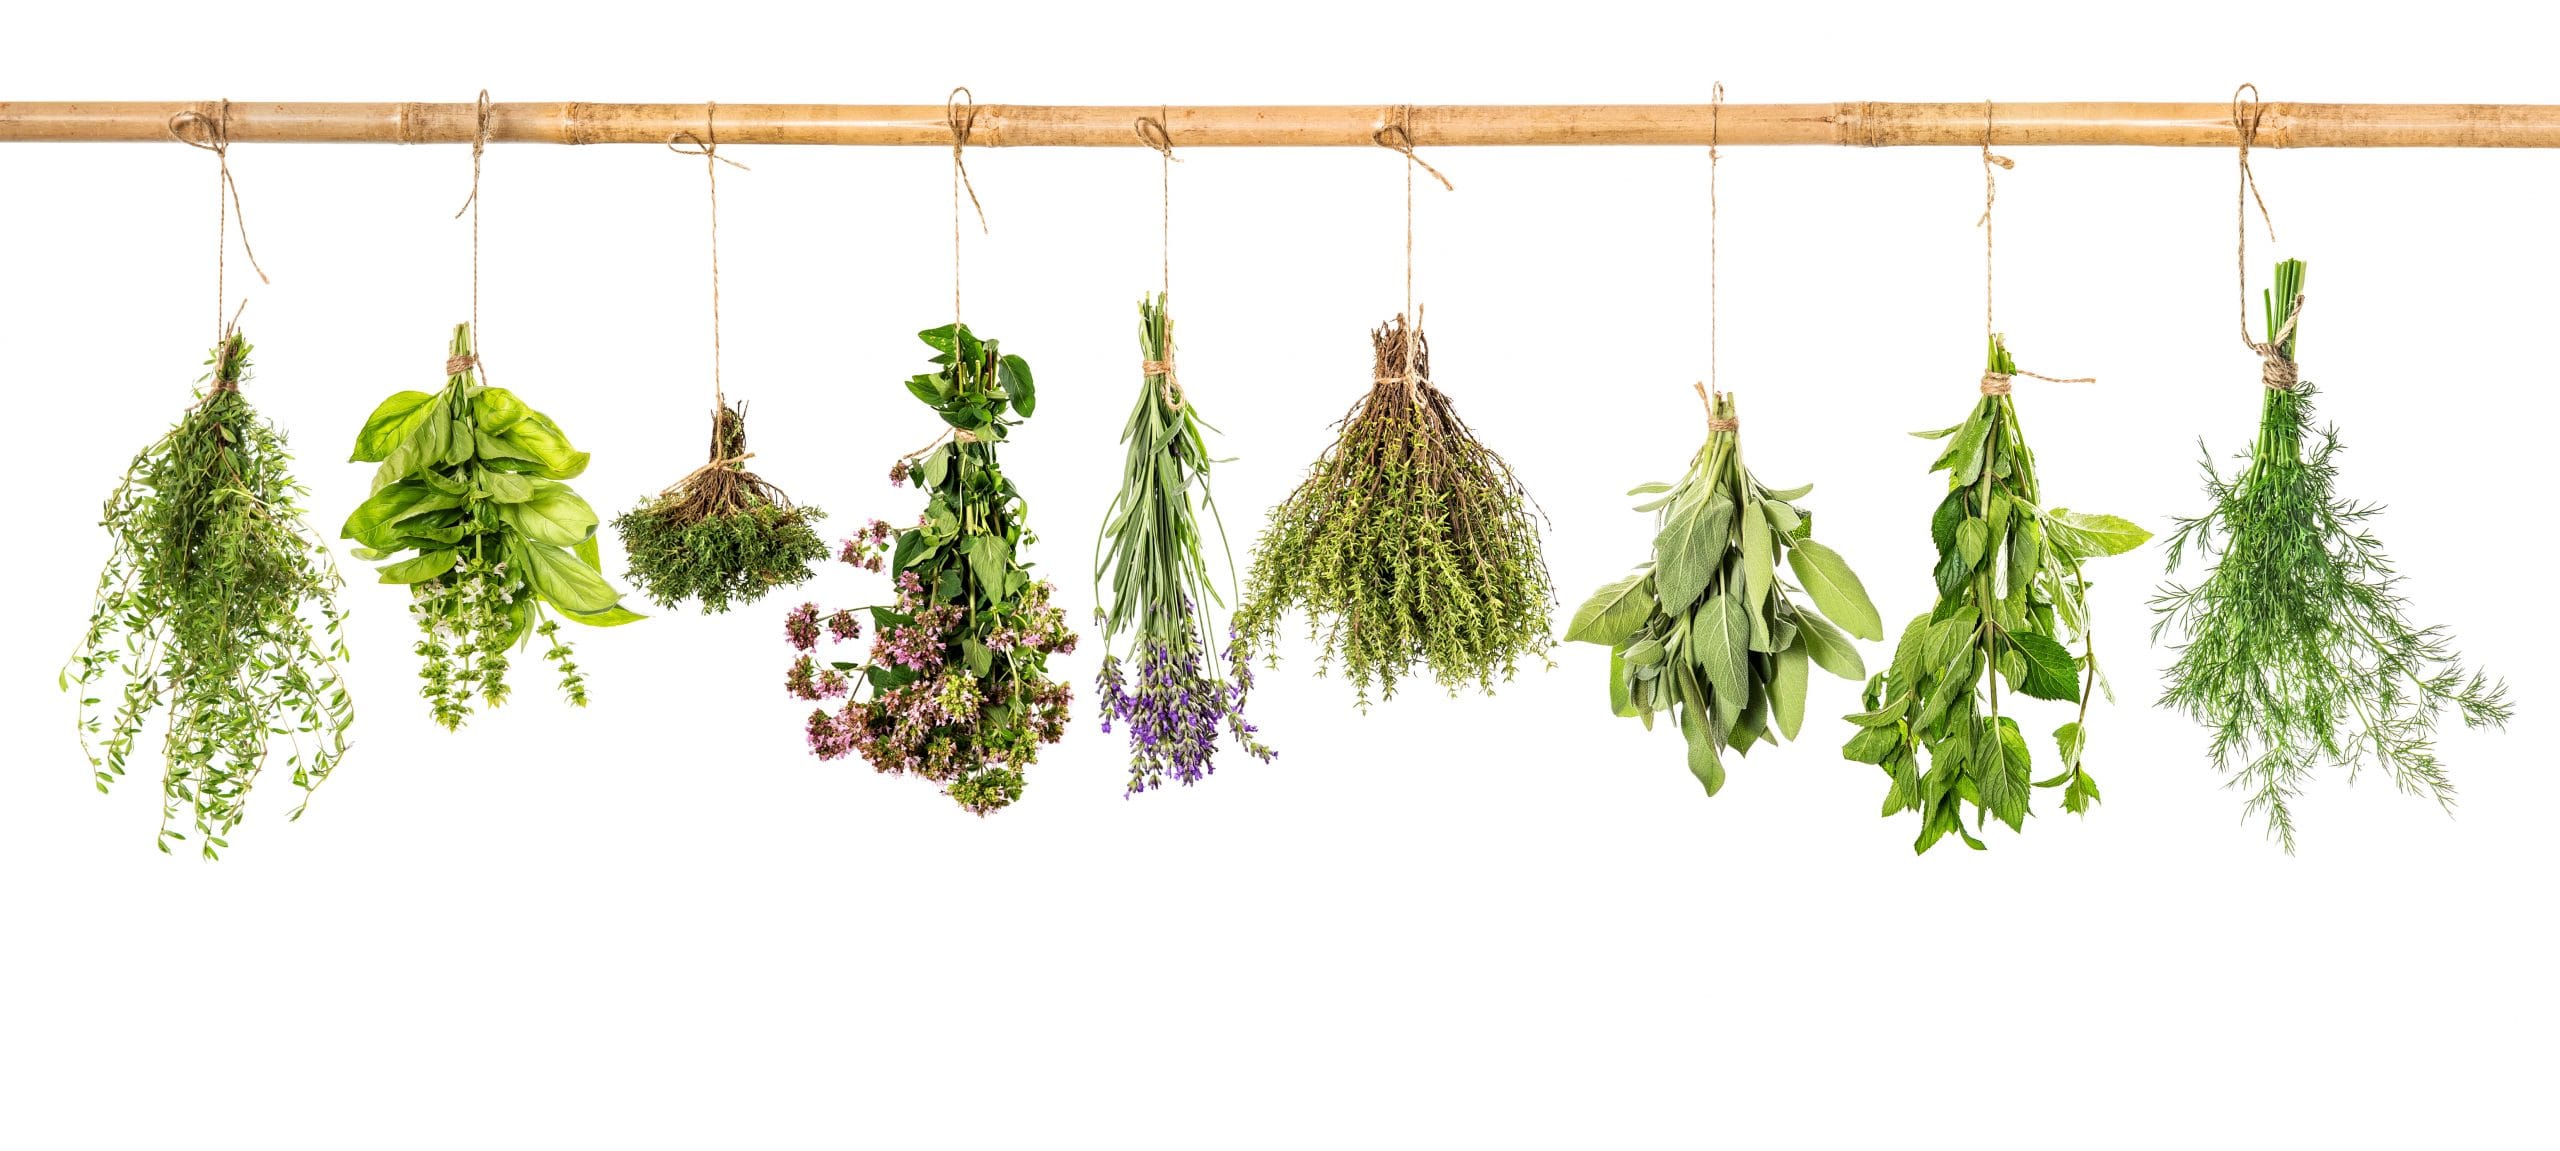 Sleep: A row of herbs hanging to dry